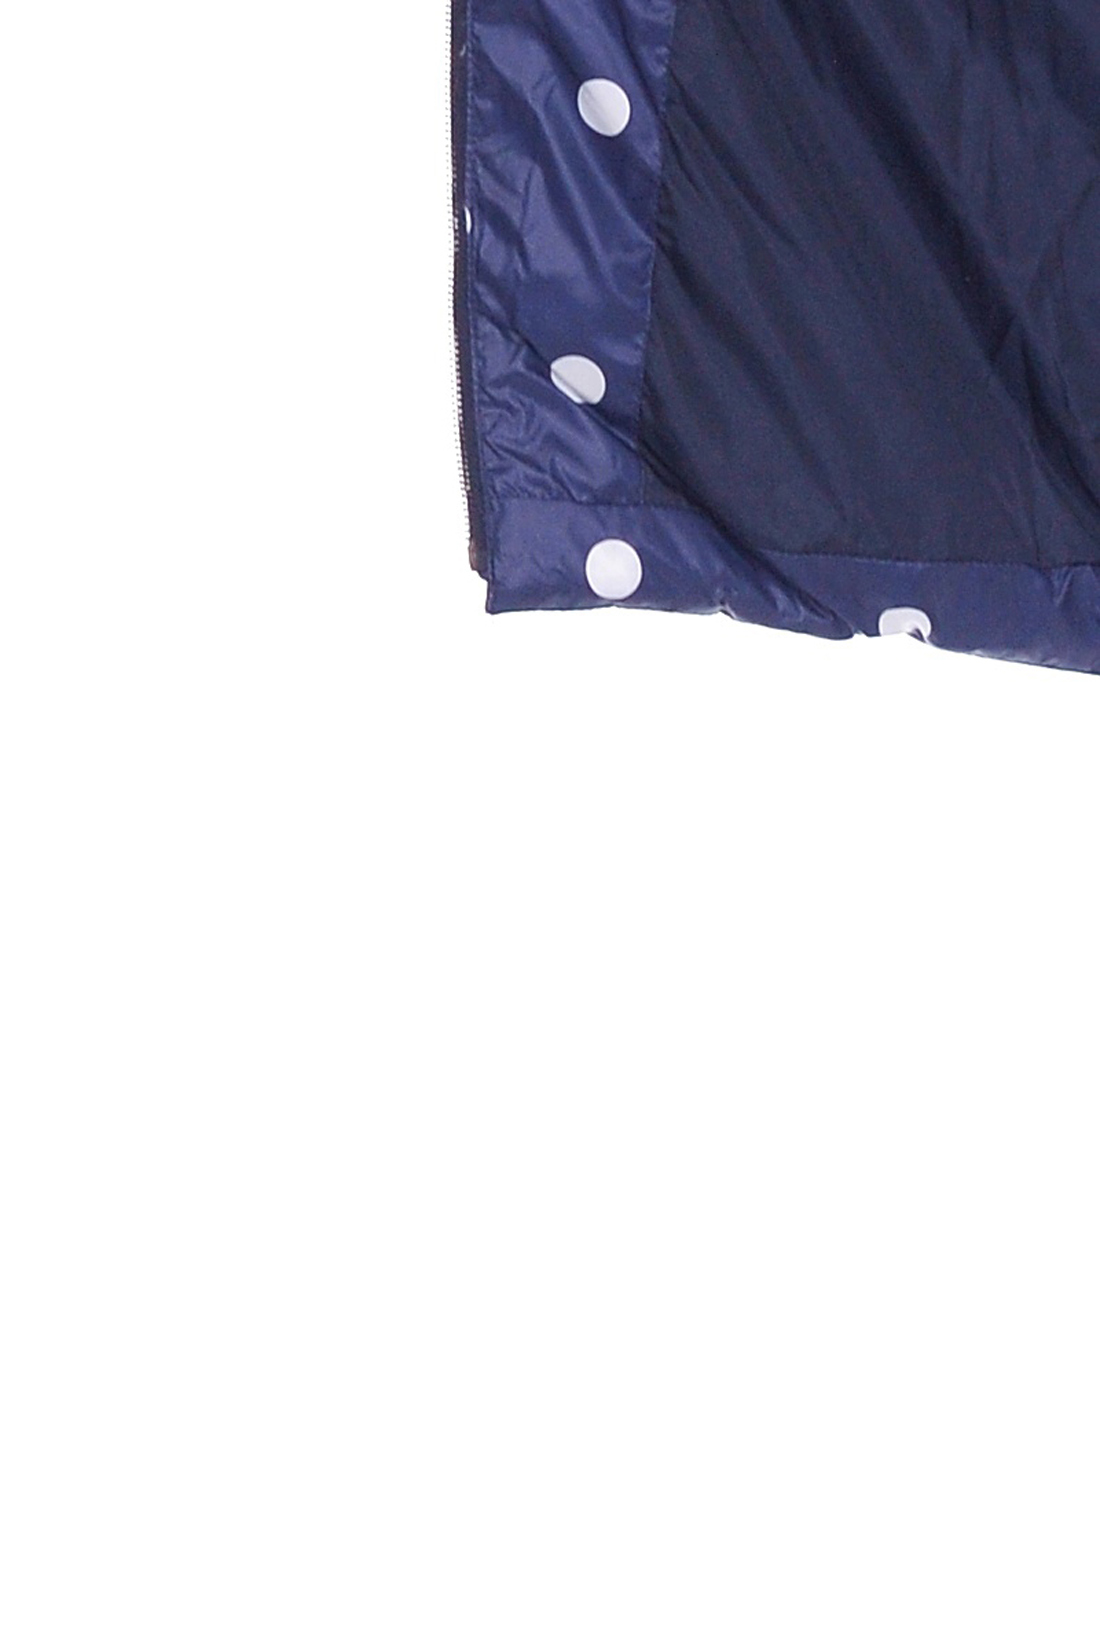 Пуховик с узором в горошек (арт. baon B009539), размер 3XL, цвет dark navy printed#синий Пуховик с узором в горошек (арт. baon B009539) - фото 3